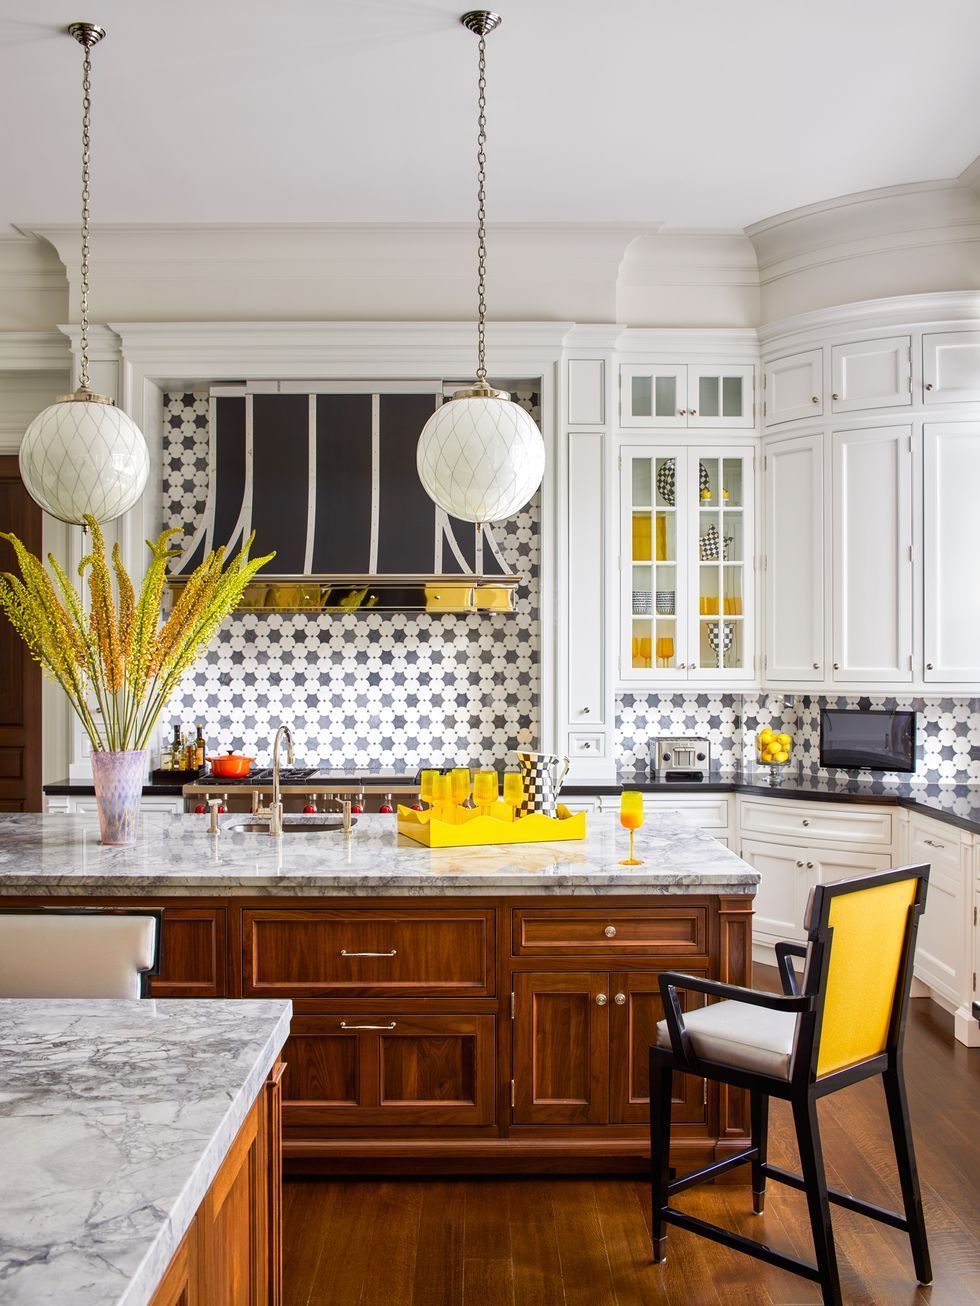 51 Gorgeous Kitchen Backsplash Ideas, Tile Backsplash Gallery